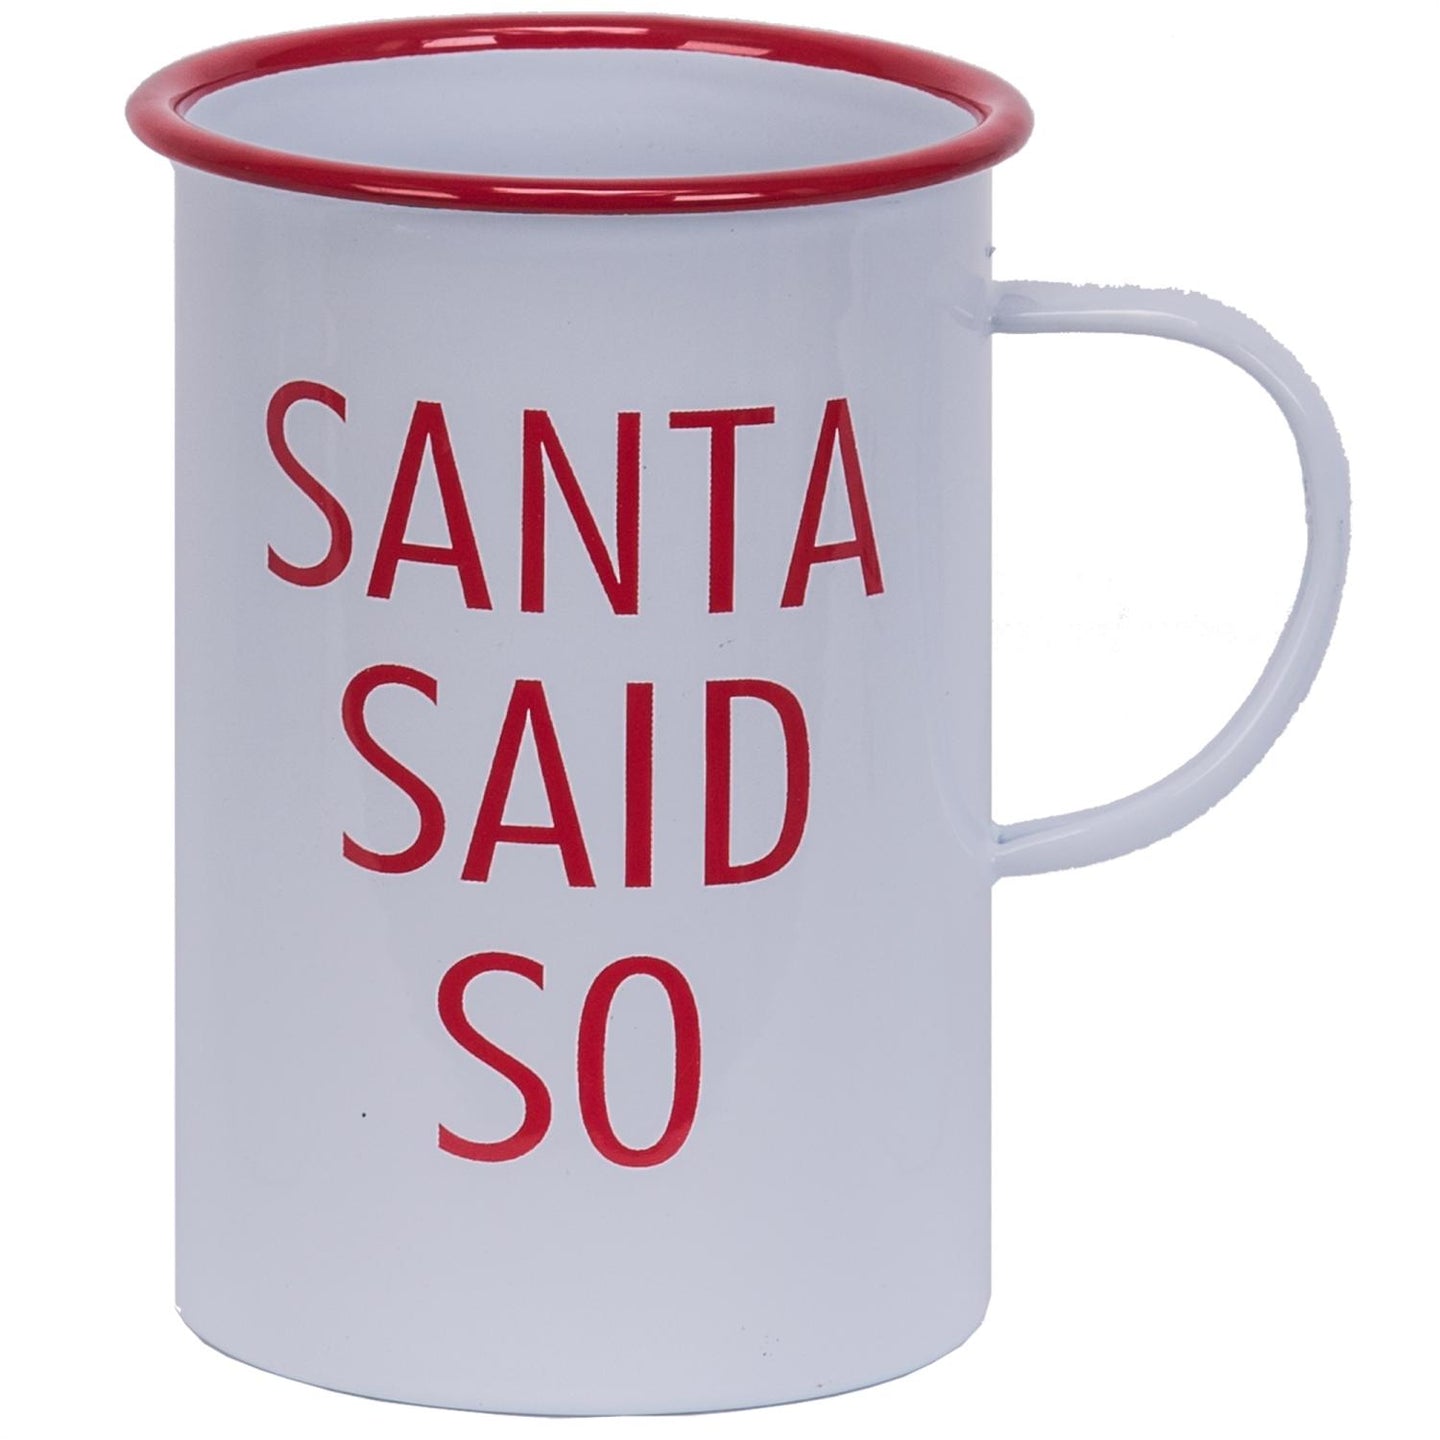 Santa Said So Enamelware Mug